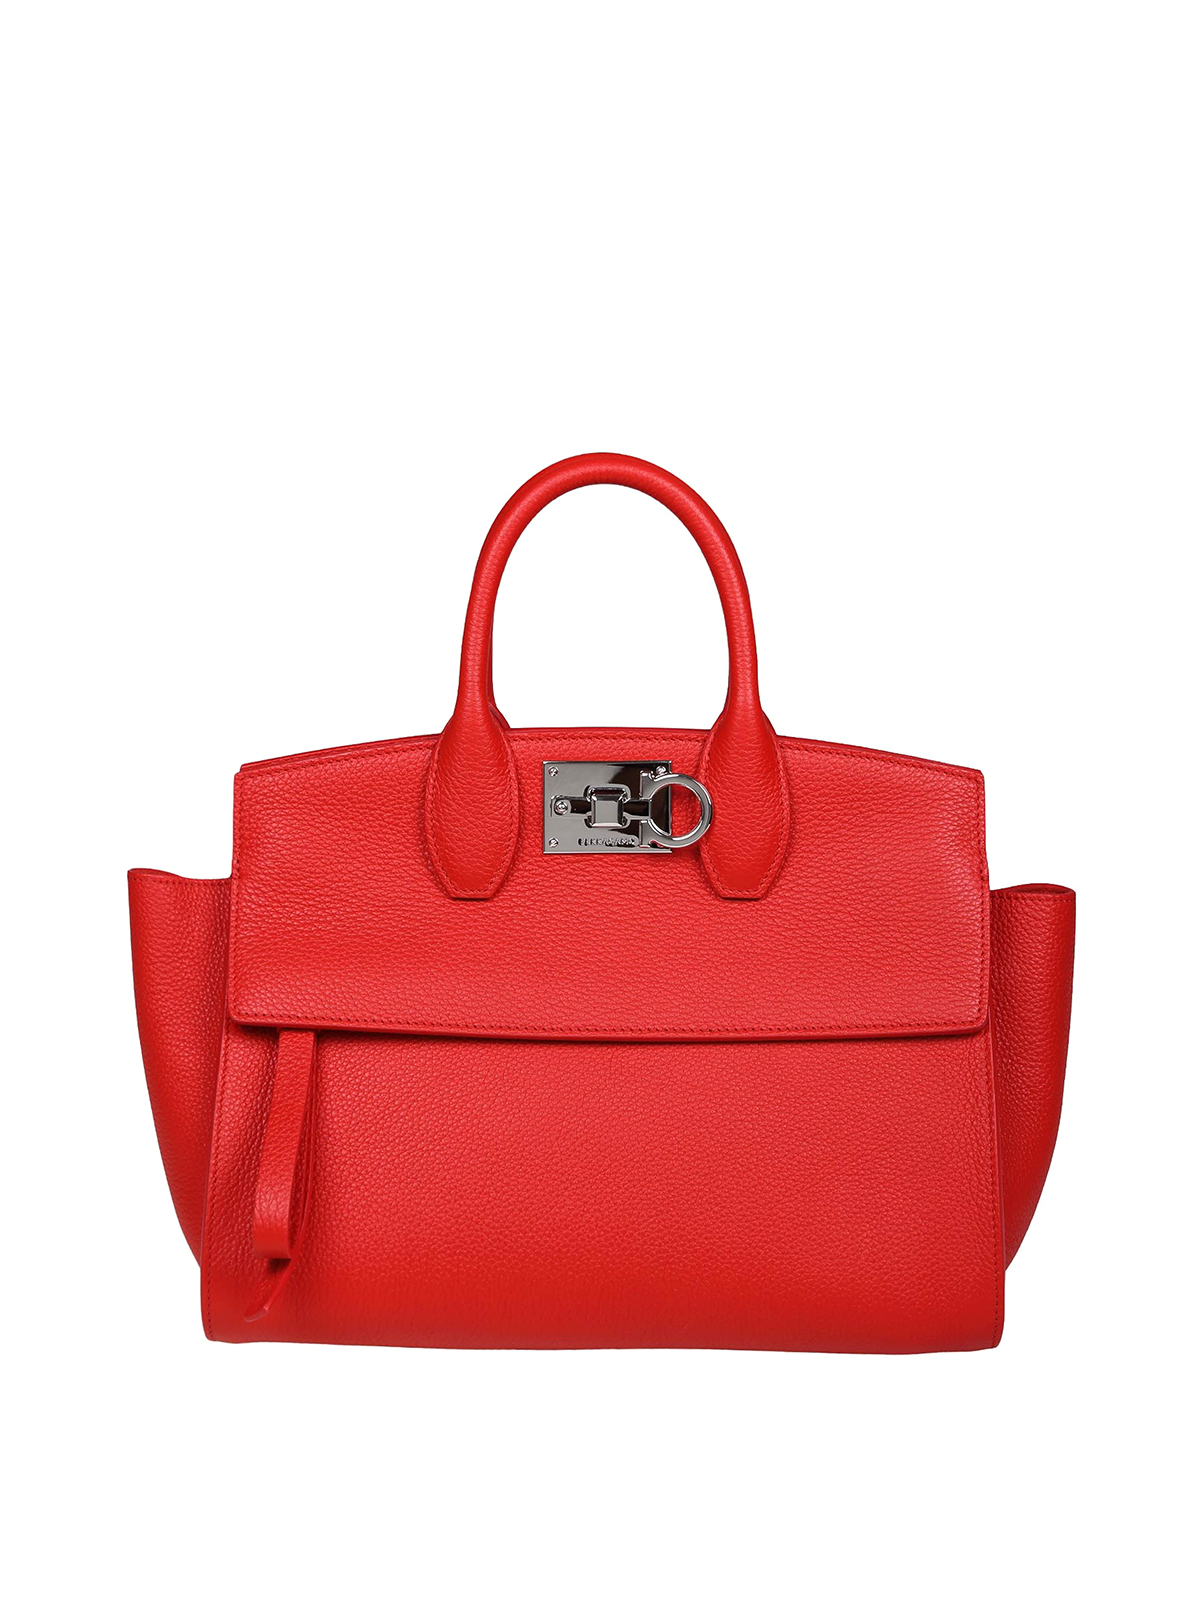 Ferragamo Studio Soft Leather Handbag In Red